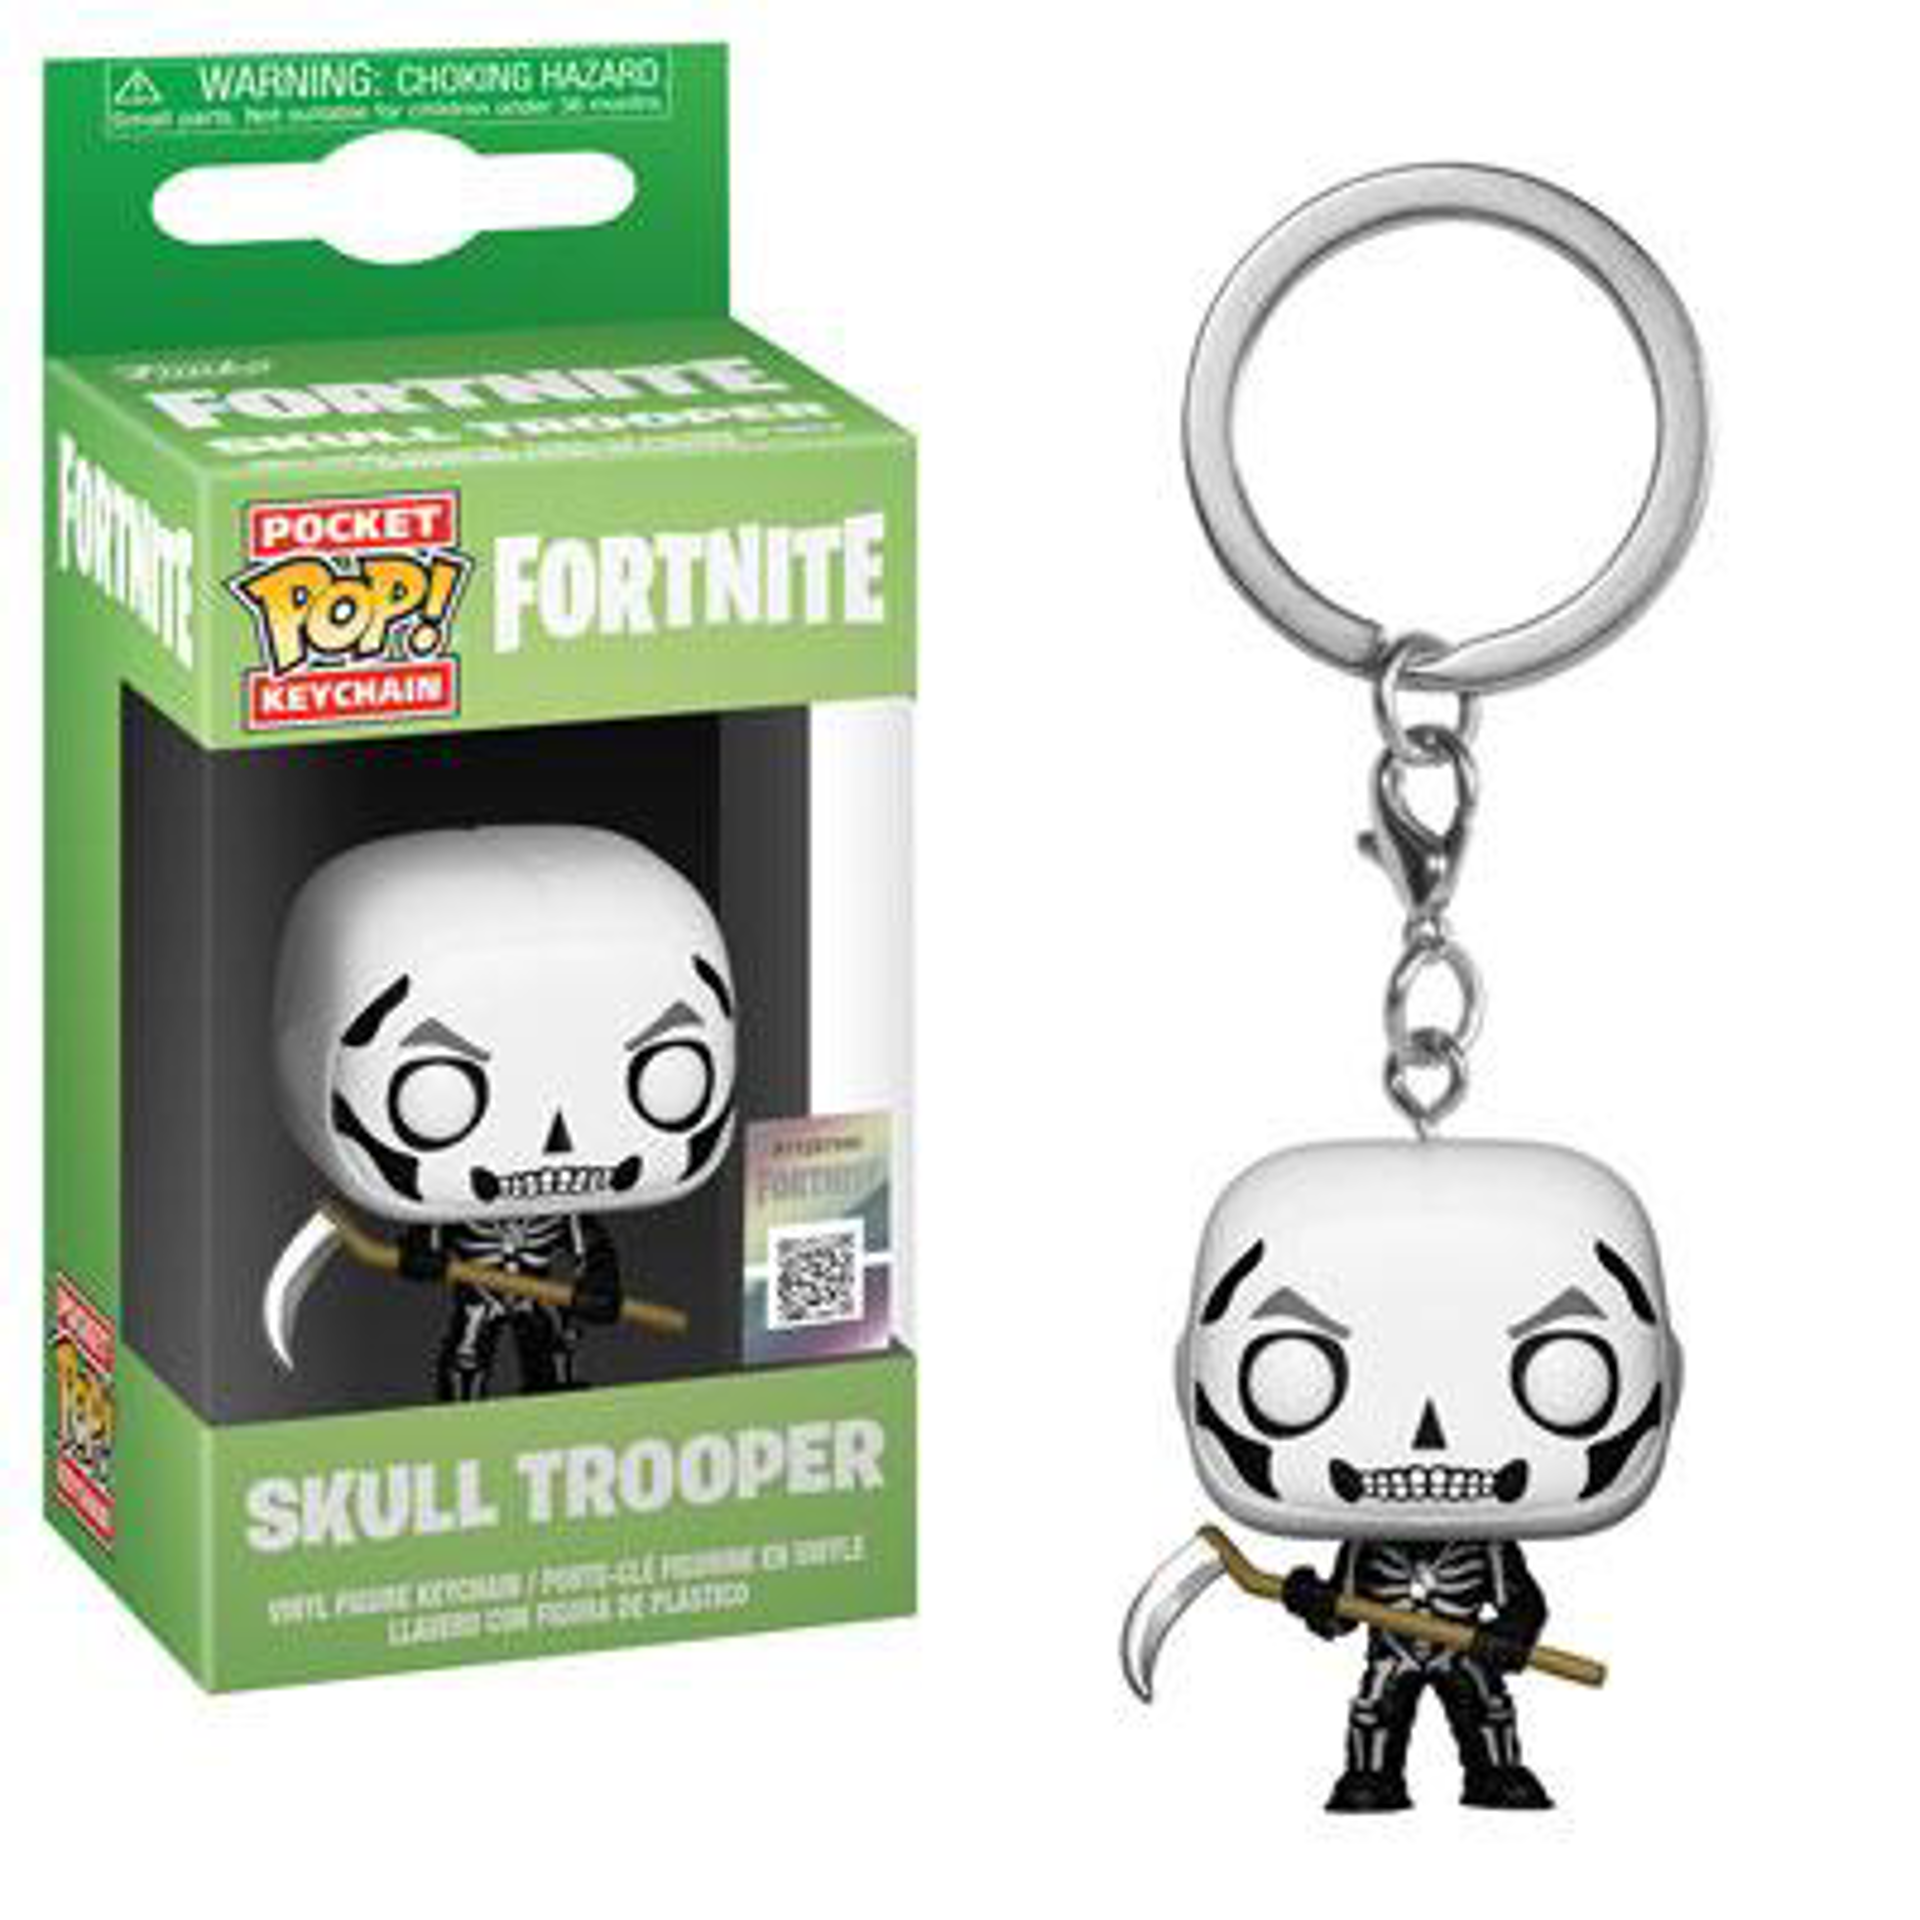 Funko Pocket Pop! Keychain Fortnite Skull Trooper